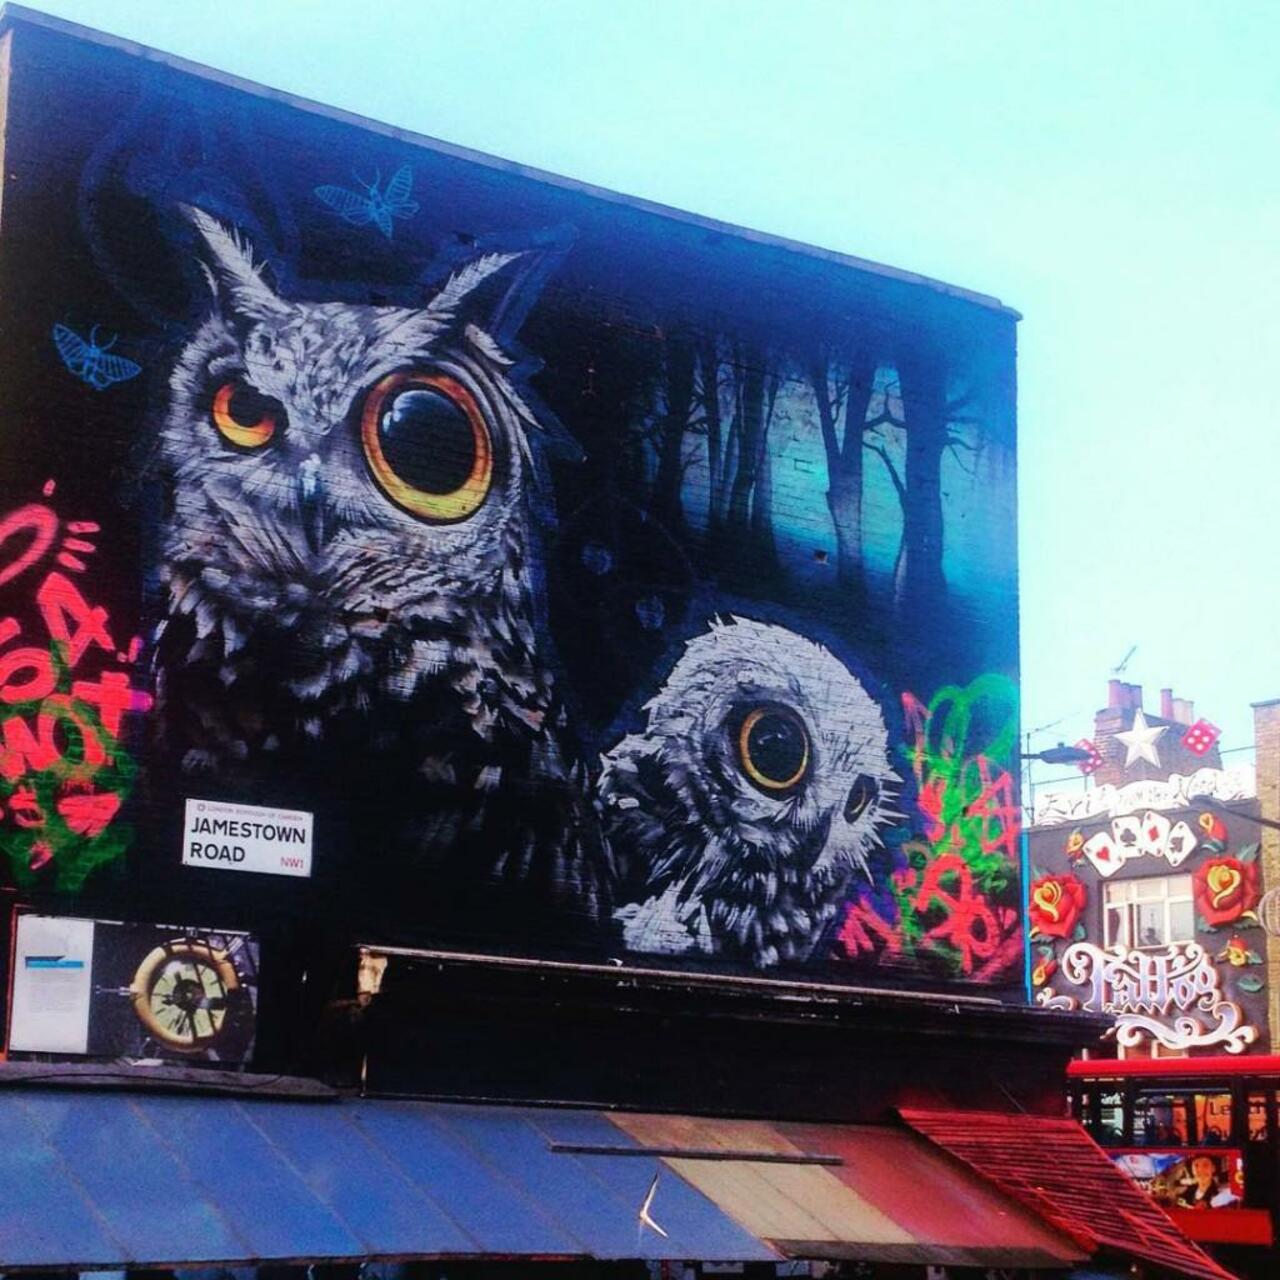 danilo_machin #streetiam #streetart #Camden #London #graffiti #owl - http://streetiam.com/danilo_machin-2/ https://t.co/1No6LbnZiK